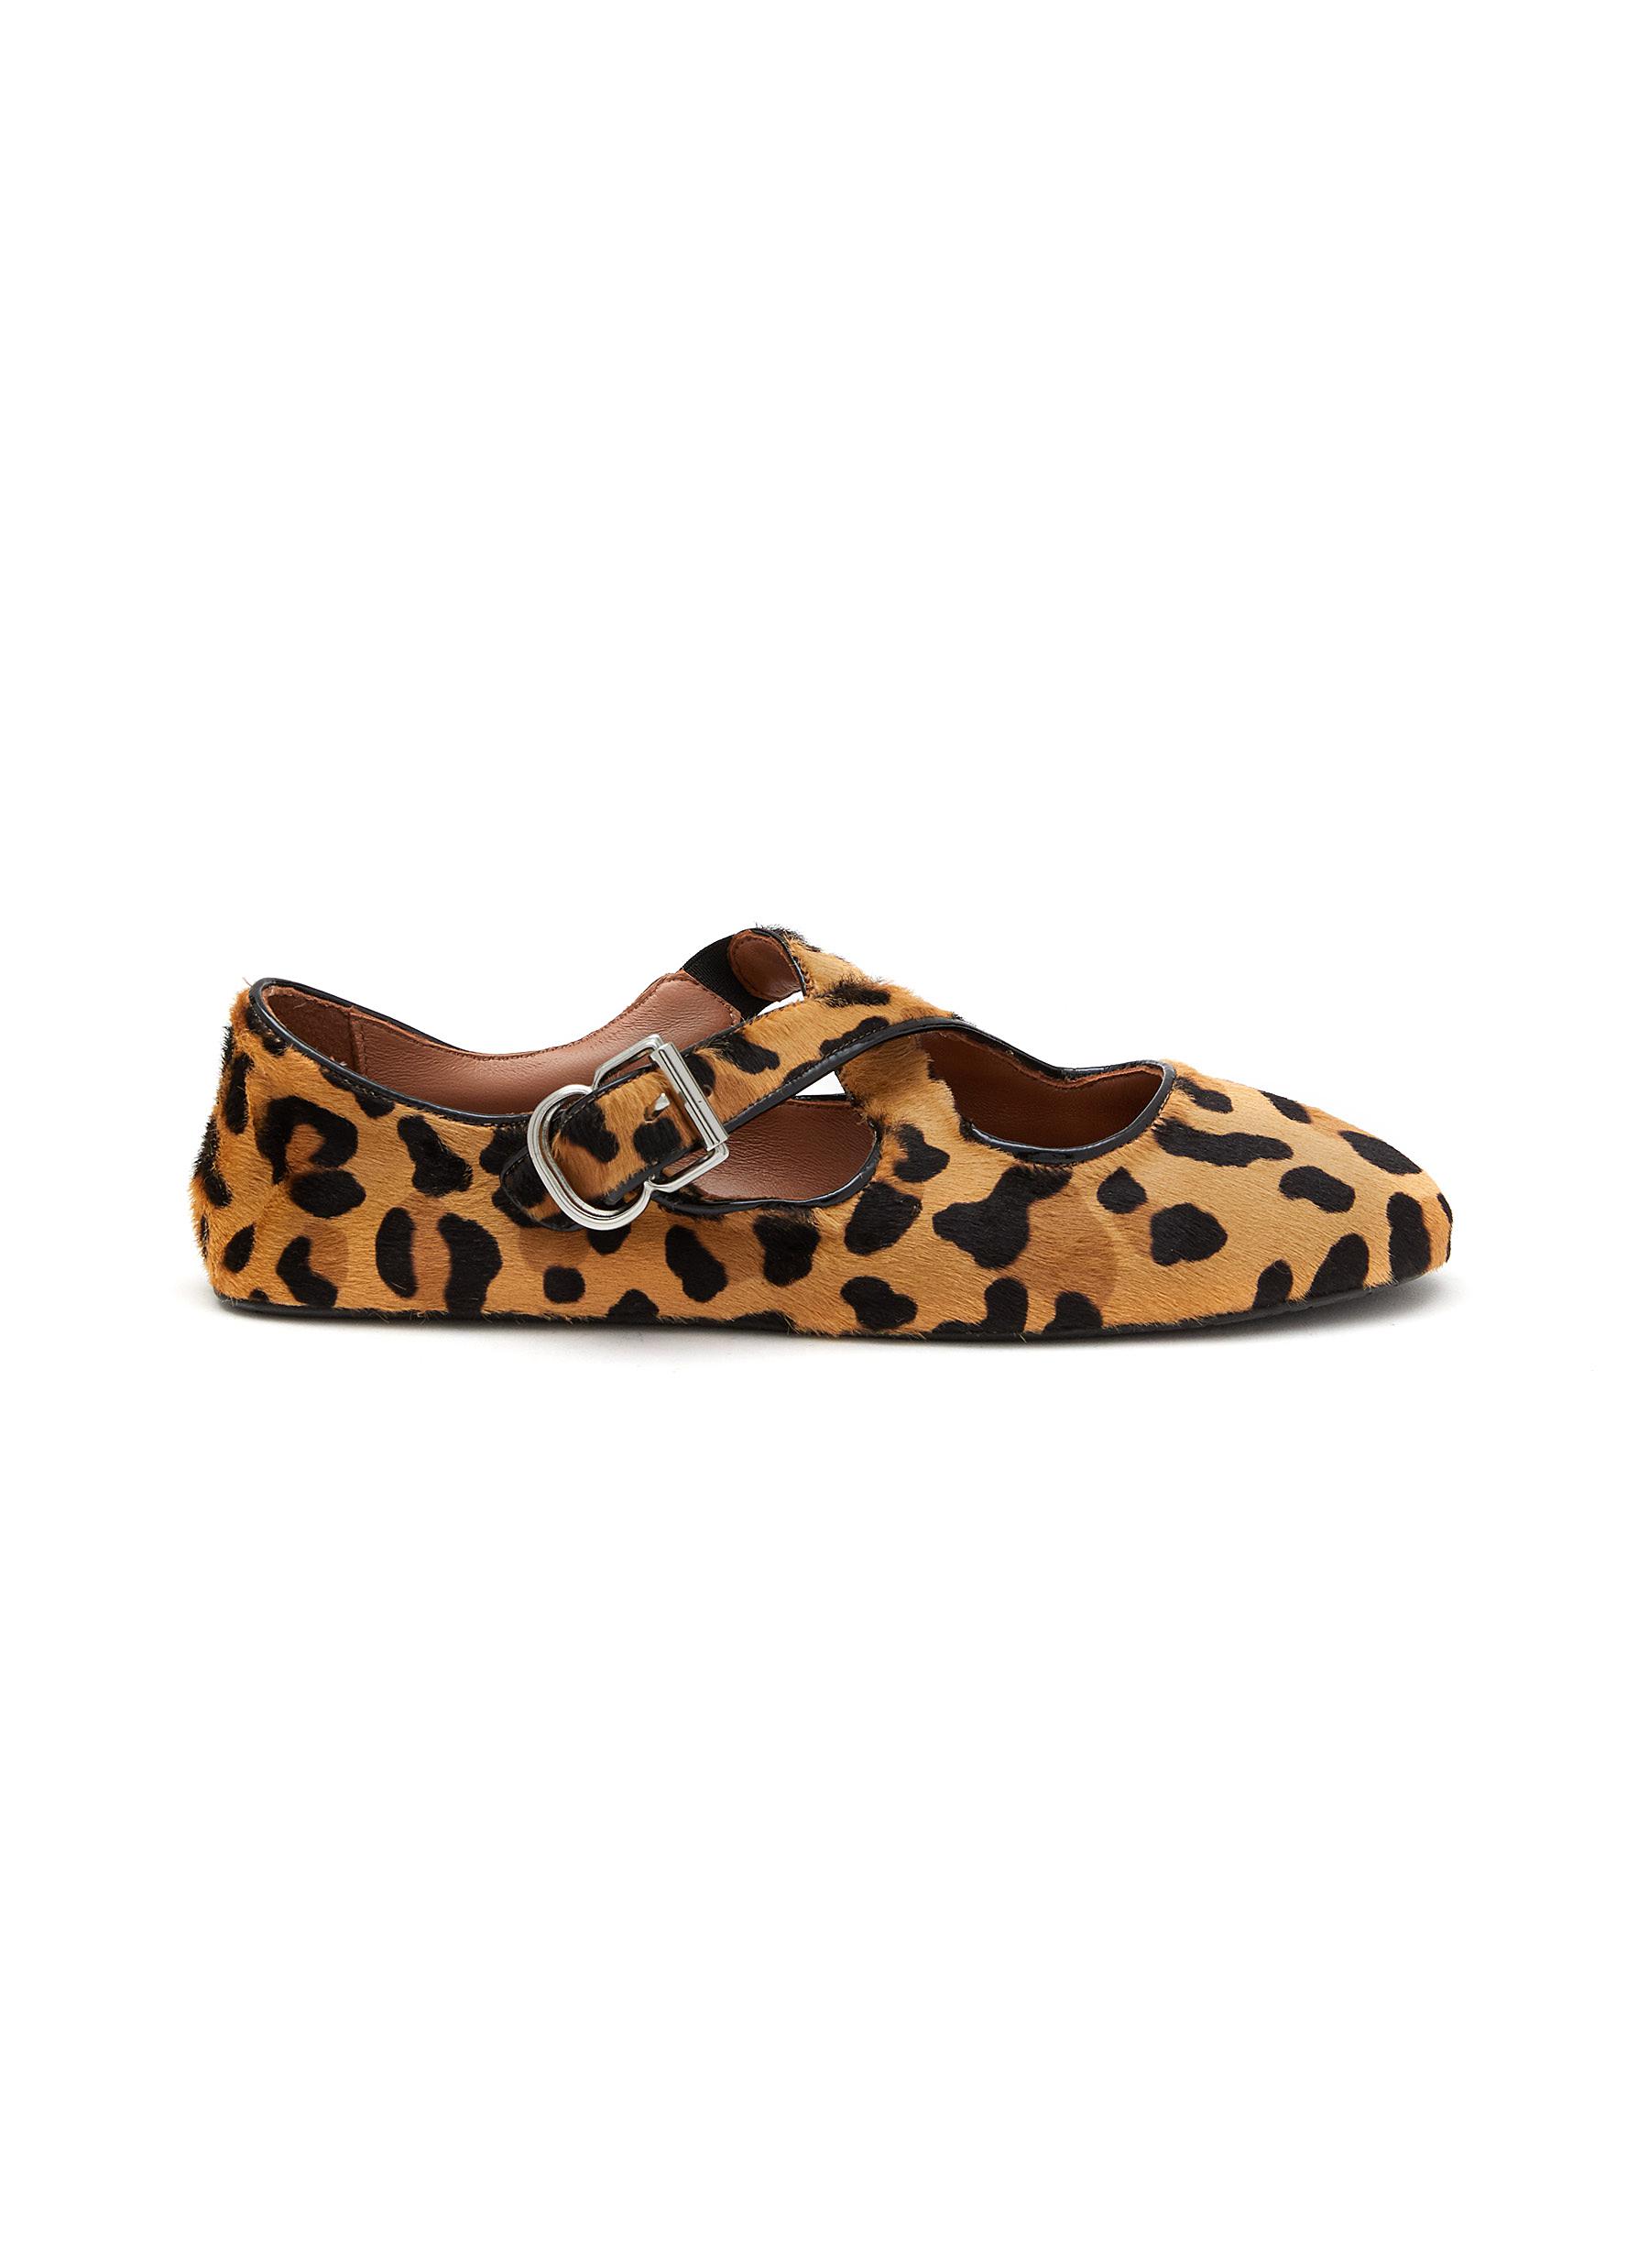 ALAÏA, Crisscross Strap Leopard Print Leather Ballerina Flats, Women